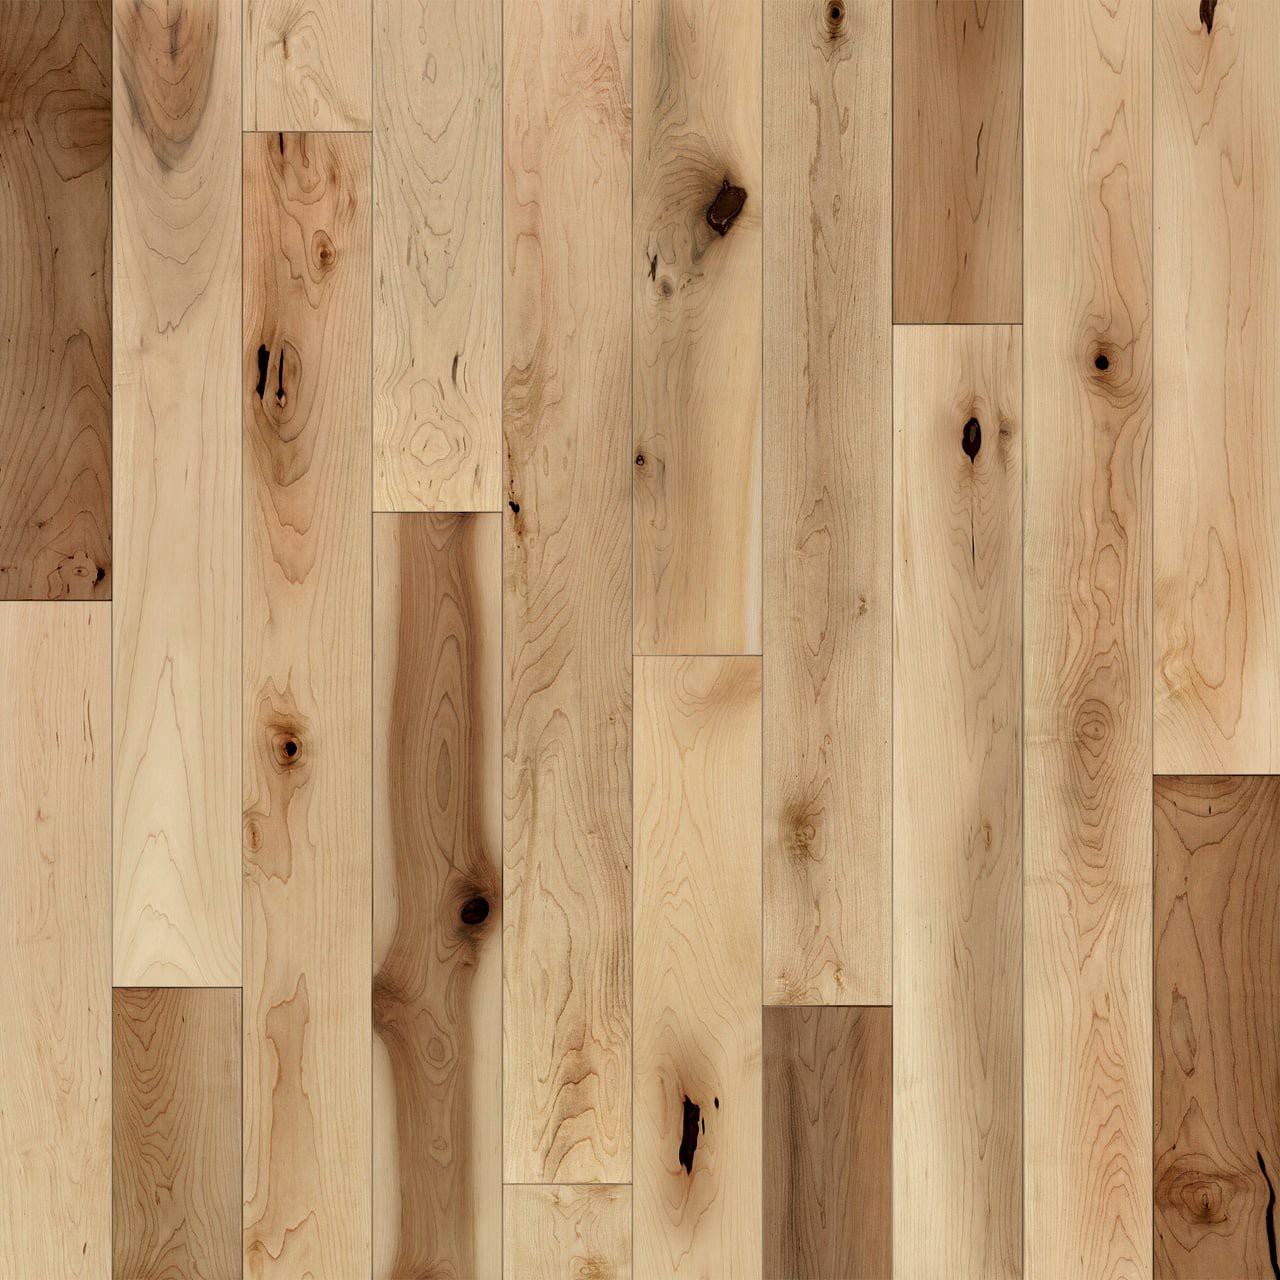 The incredible lifespan of hardwood flooring